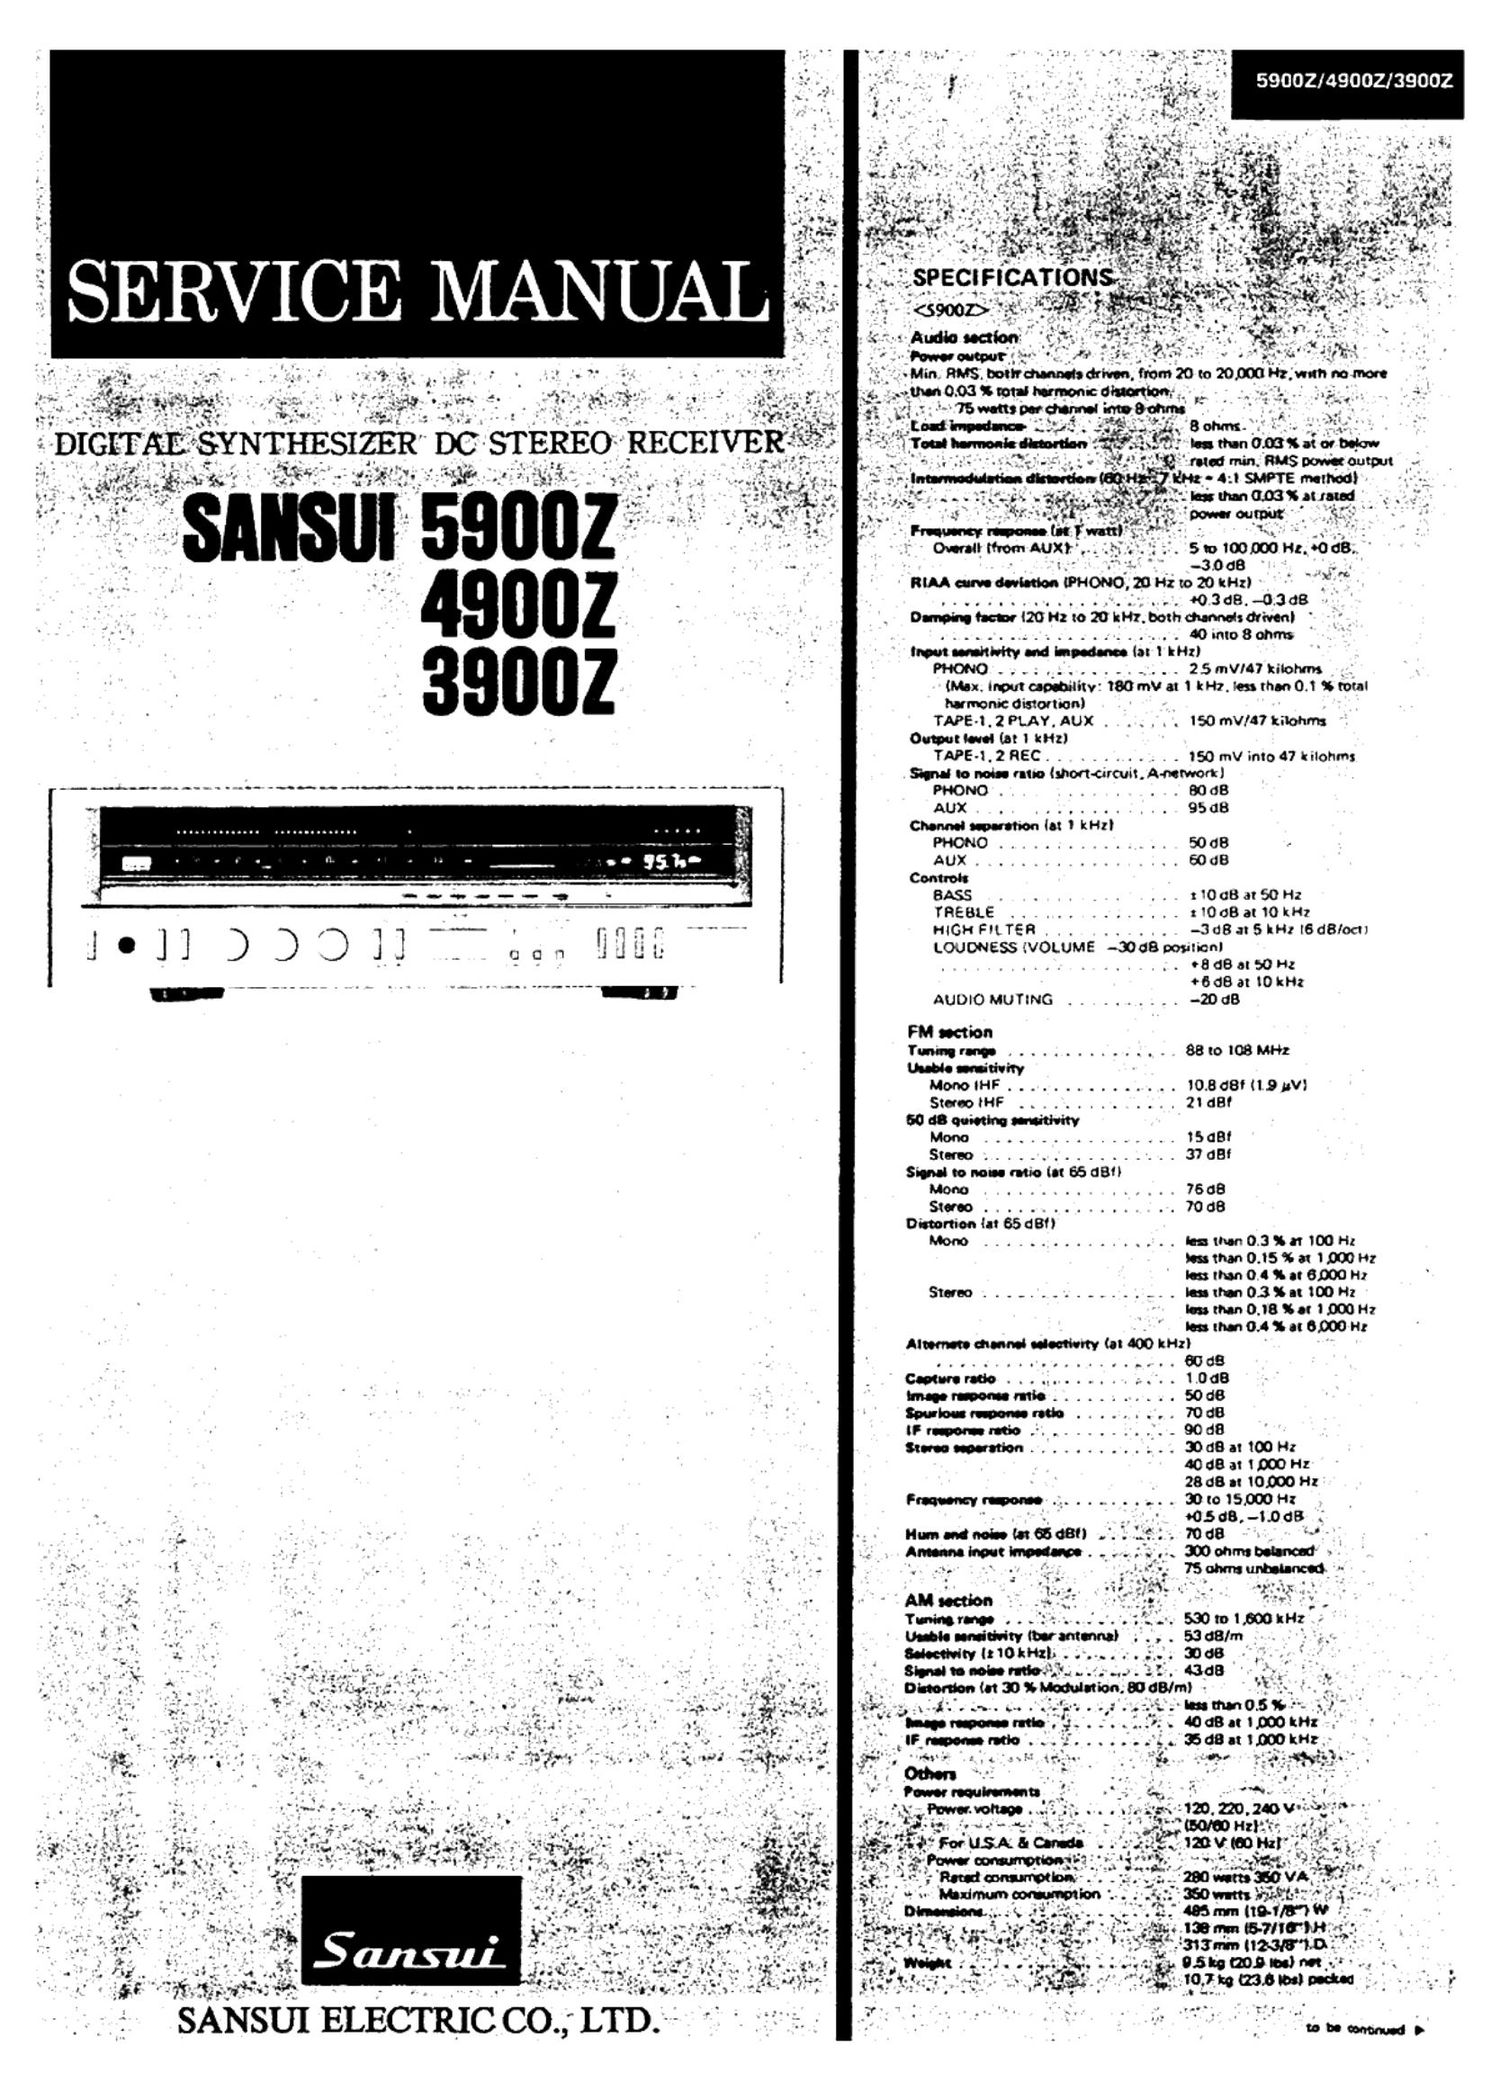 Sansui 3900 Z Service Manual